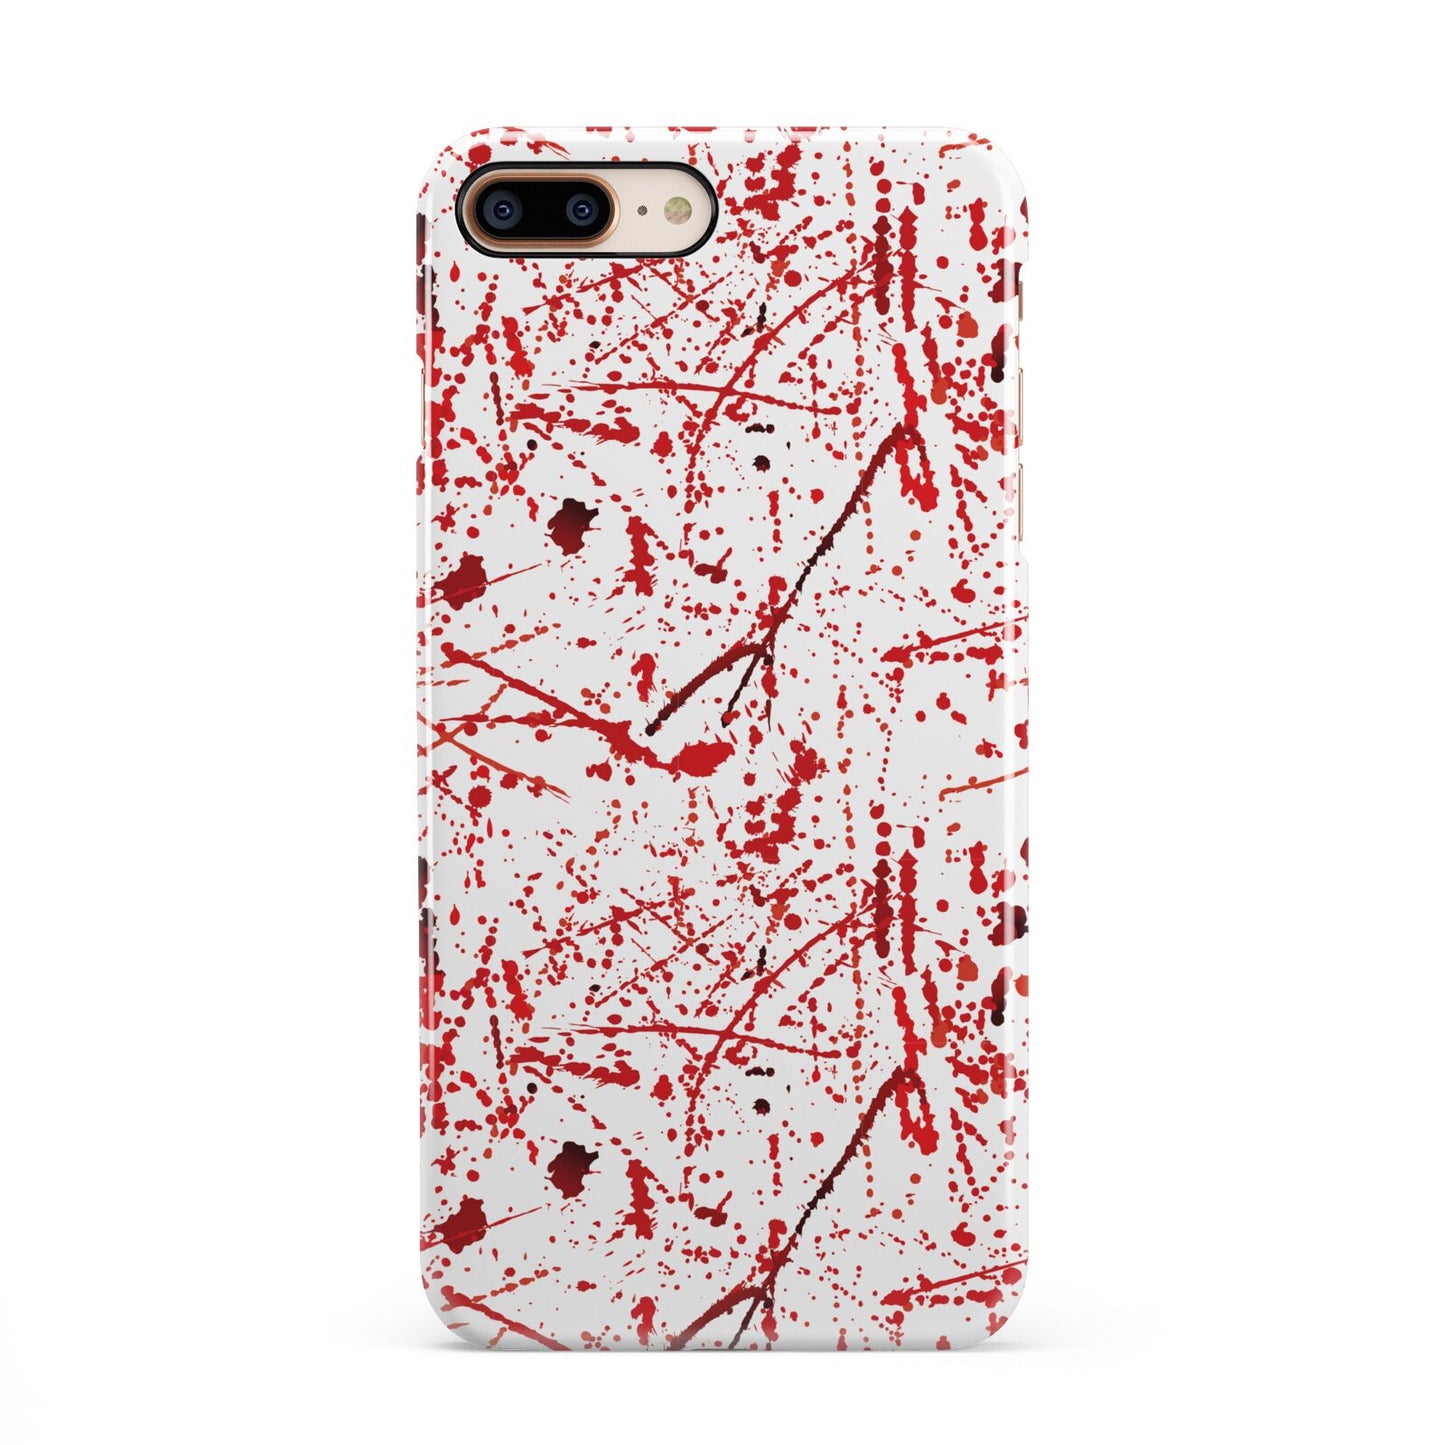 Blood Splatter iPhone 8 Plus 3D Snap Case on Gold Phone